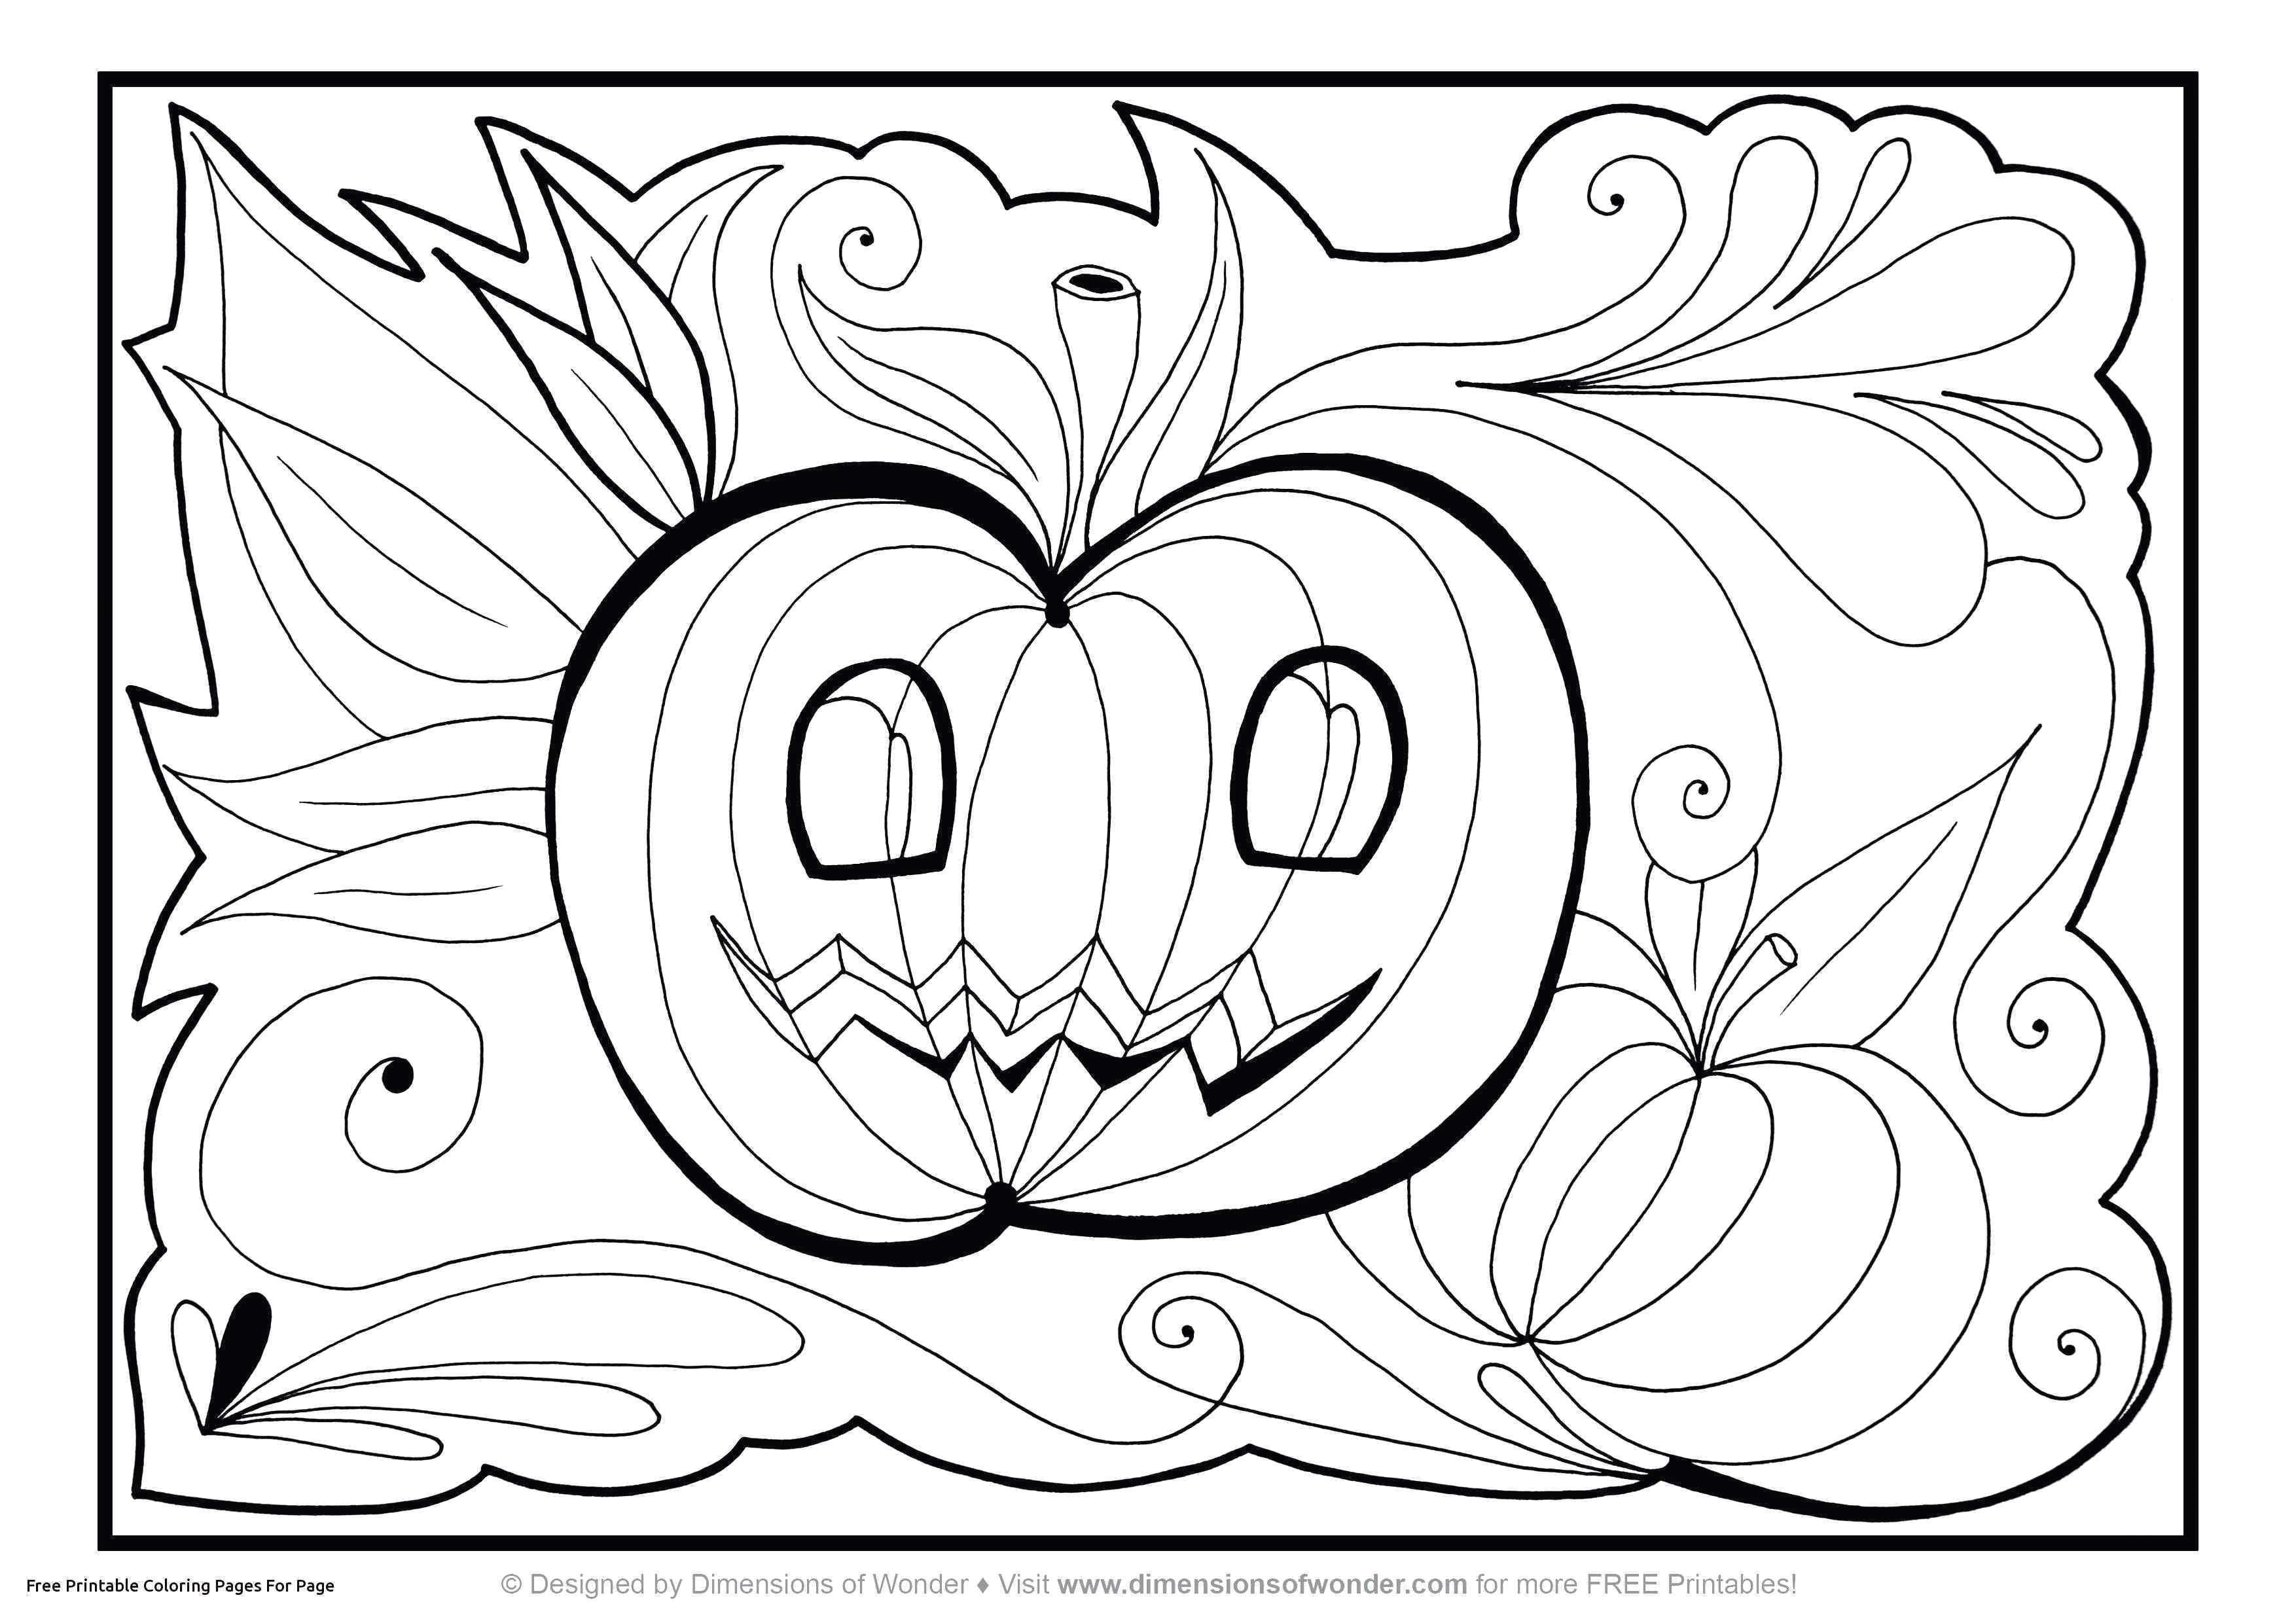 Drawing Ideas for Halloween Awesome Art Ideas for Kids Halloween Canberkarac Com